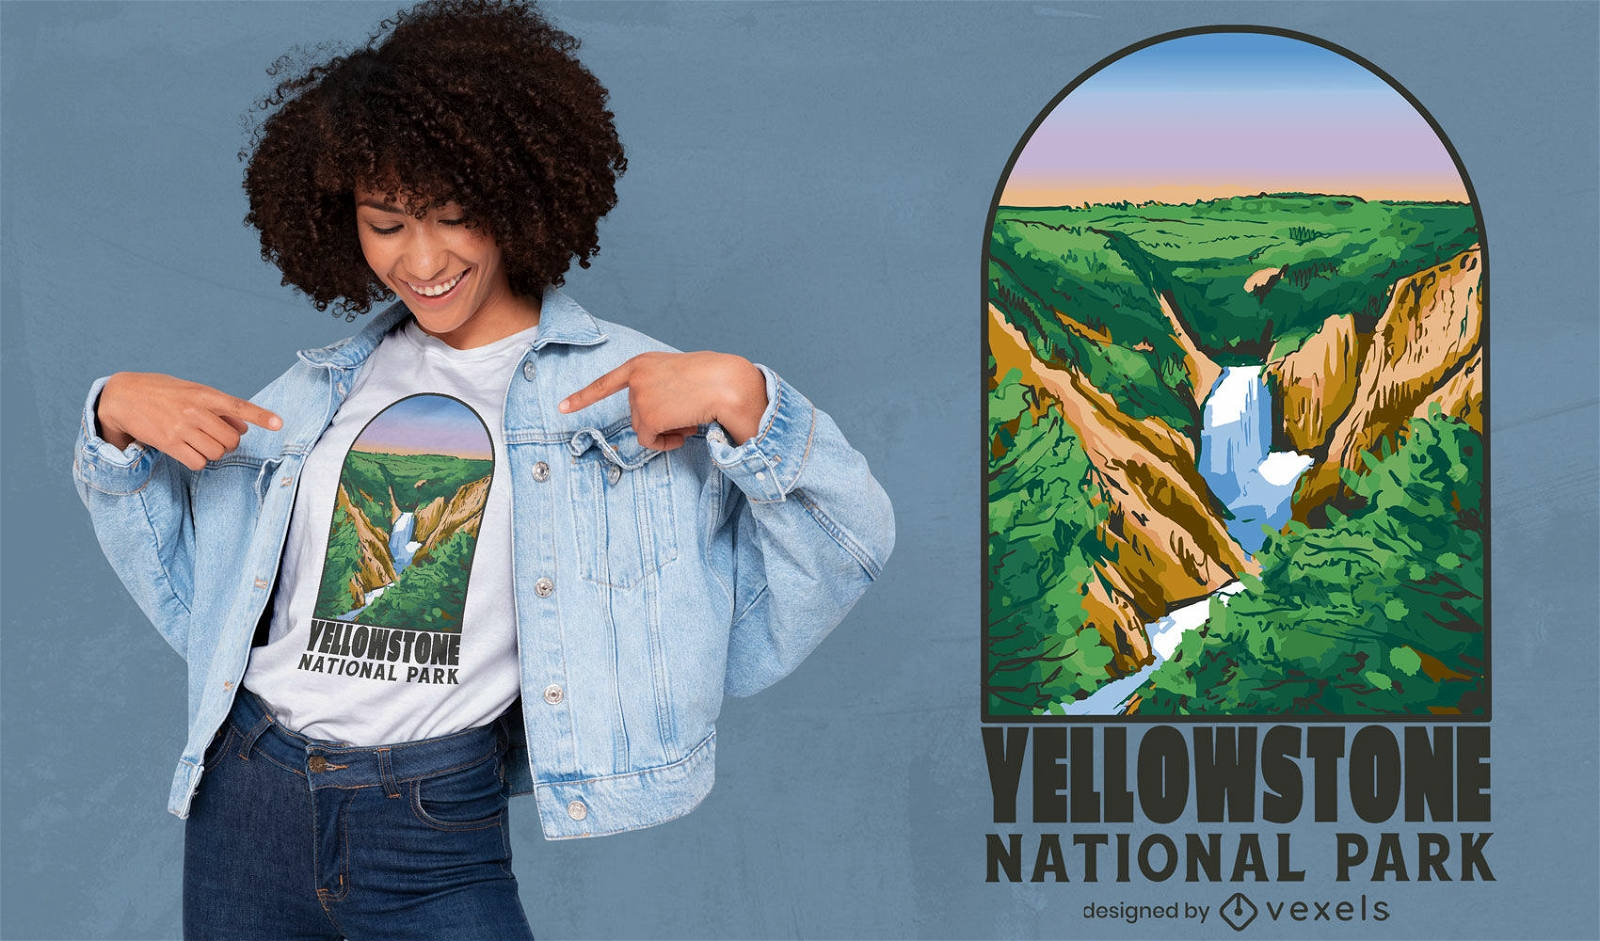 Yellowstone National Park T-shirt Design